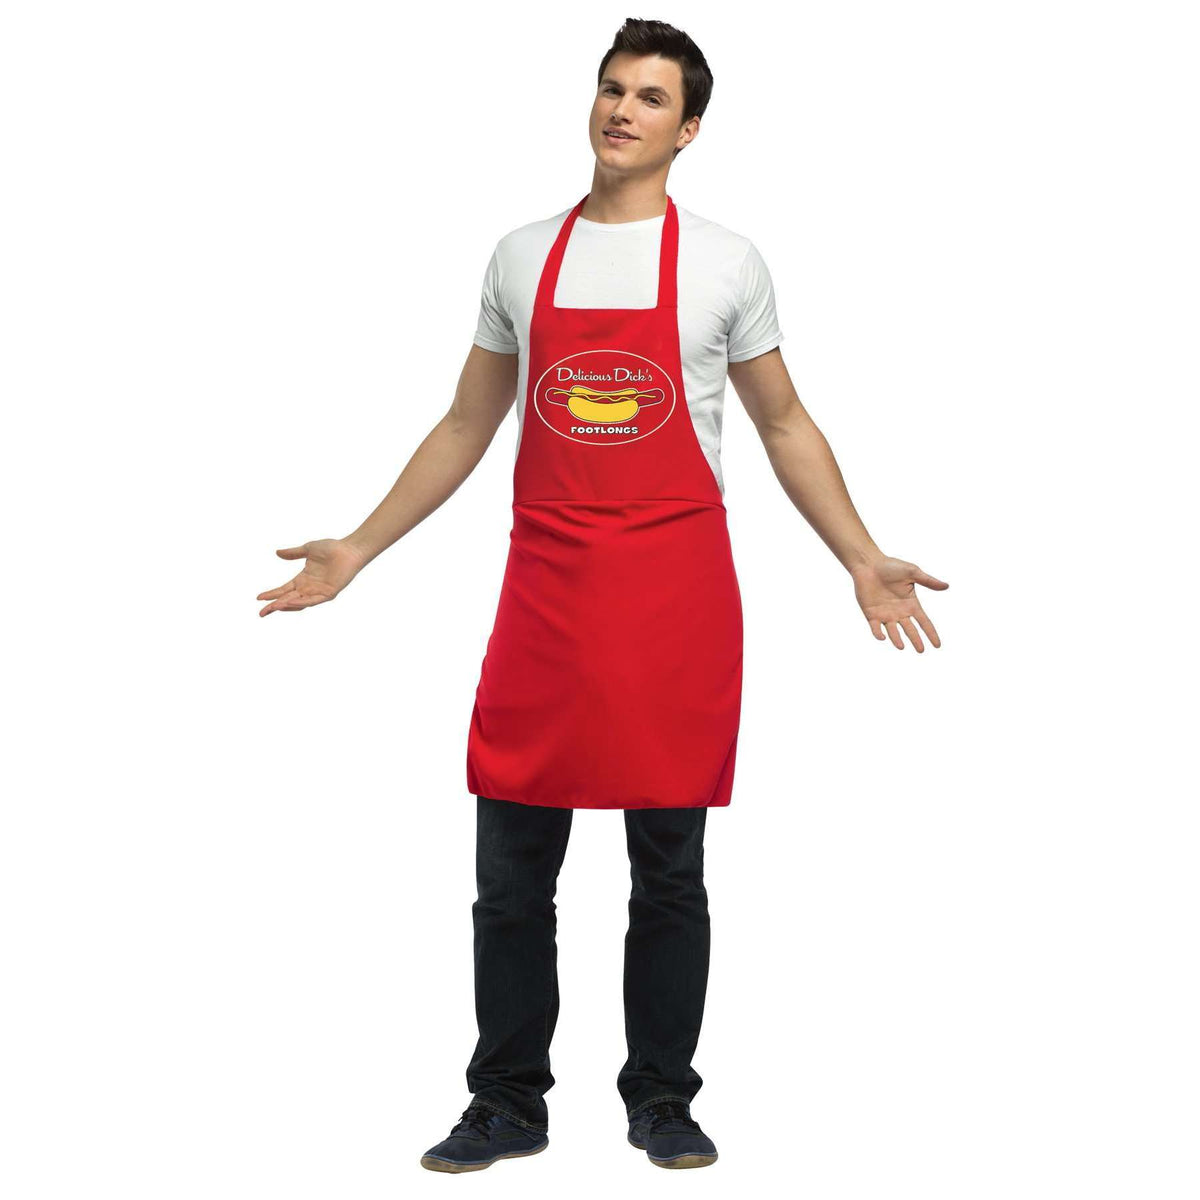 Hot Dog Vendor Dirty Apron Adult Costume